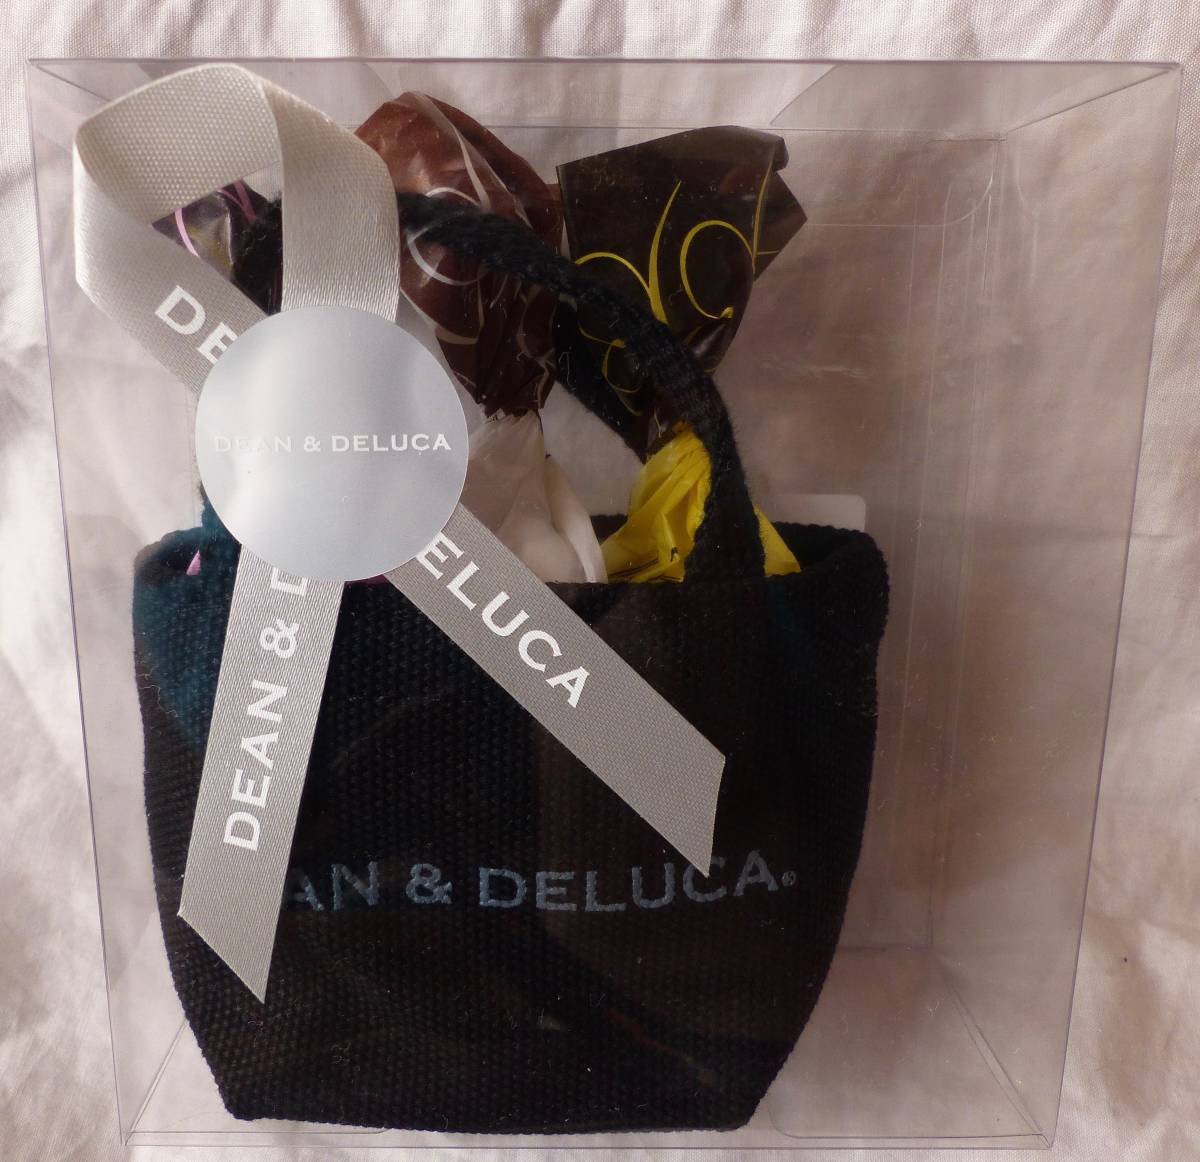  Dean and Dell -ka шоколад D&D Mini большая сумка черный ×chitidama3 шт. комплект DEAN & DELUCA